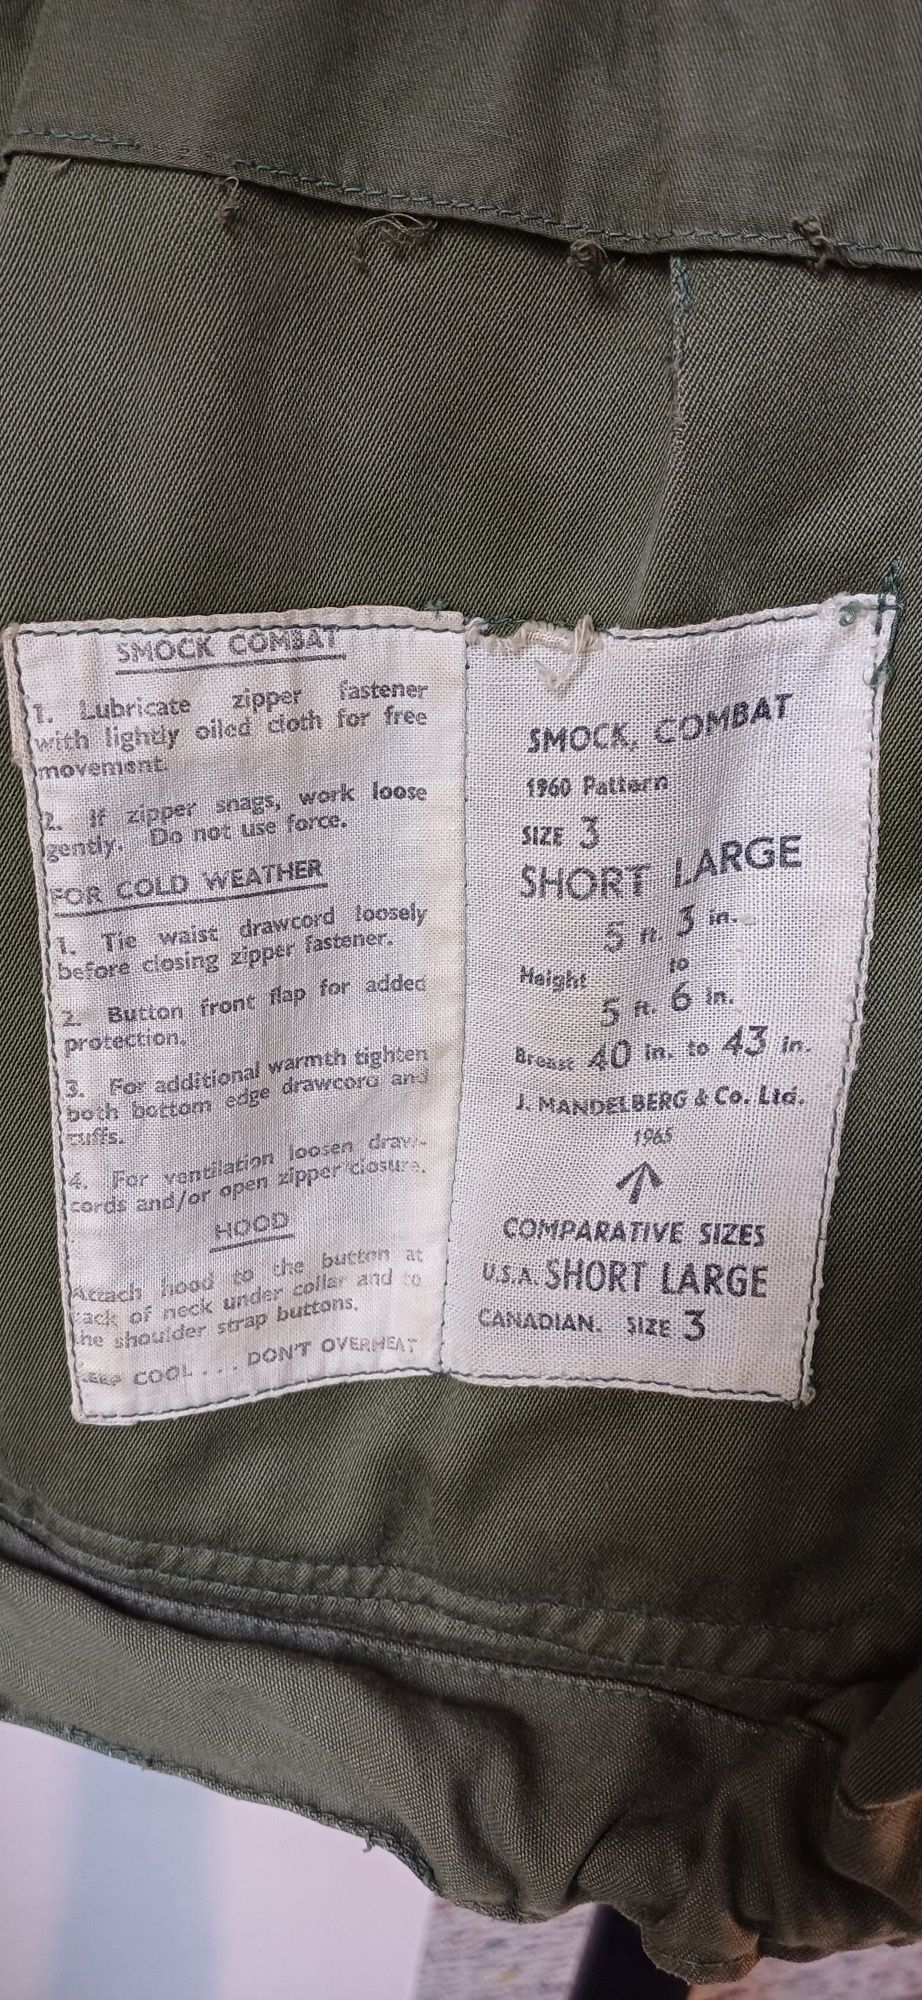 Original British Army 1960 Pattern Combat Smock Size 3 kurtka wojskowa